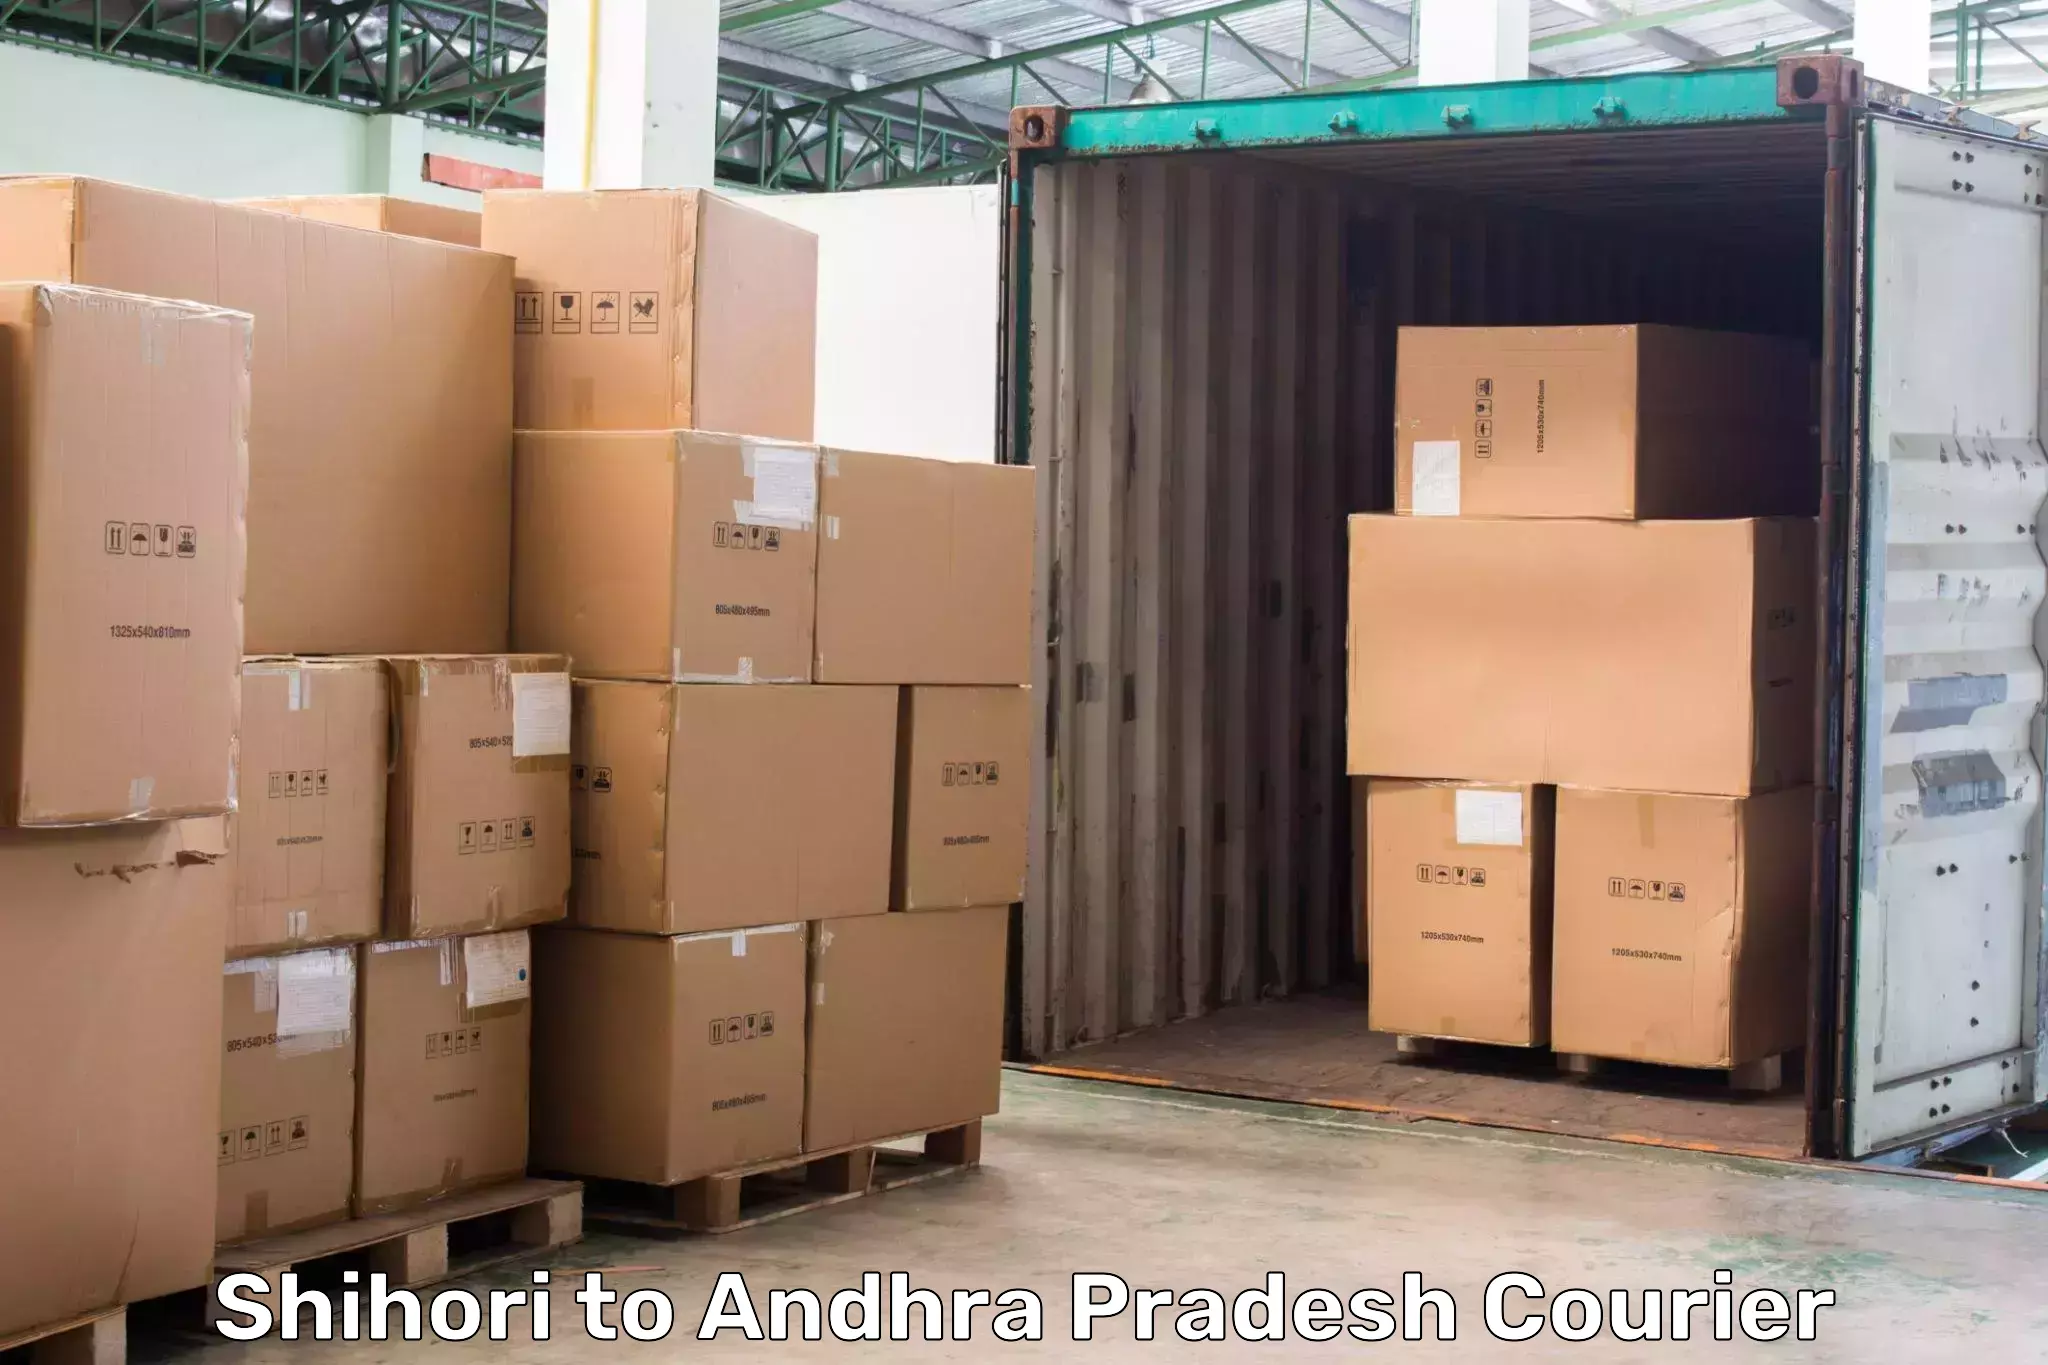 Courier service efficiency Shihori to Tirupati